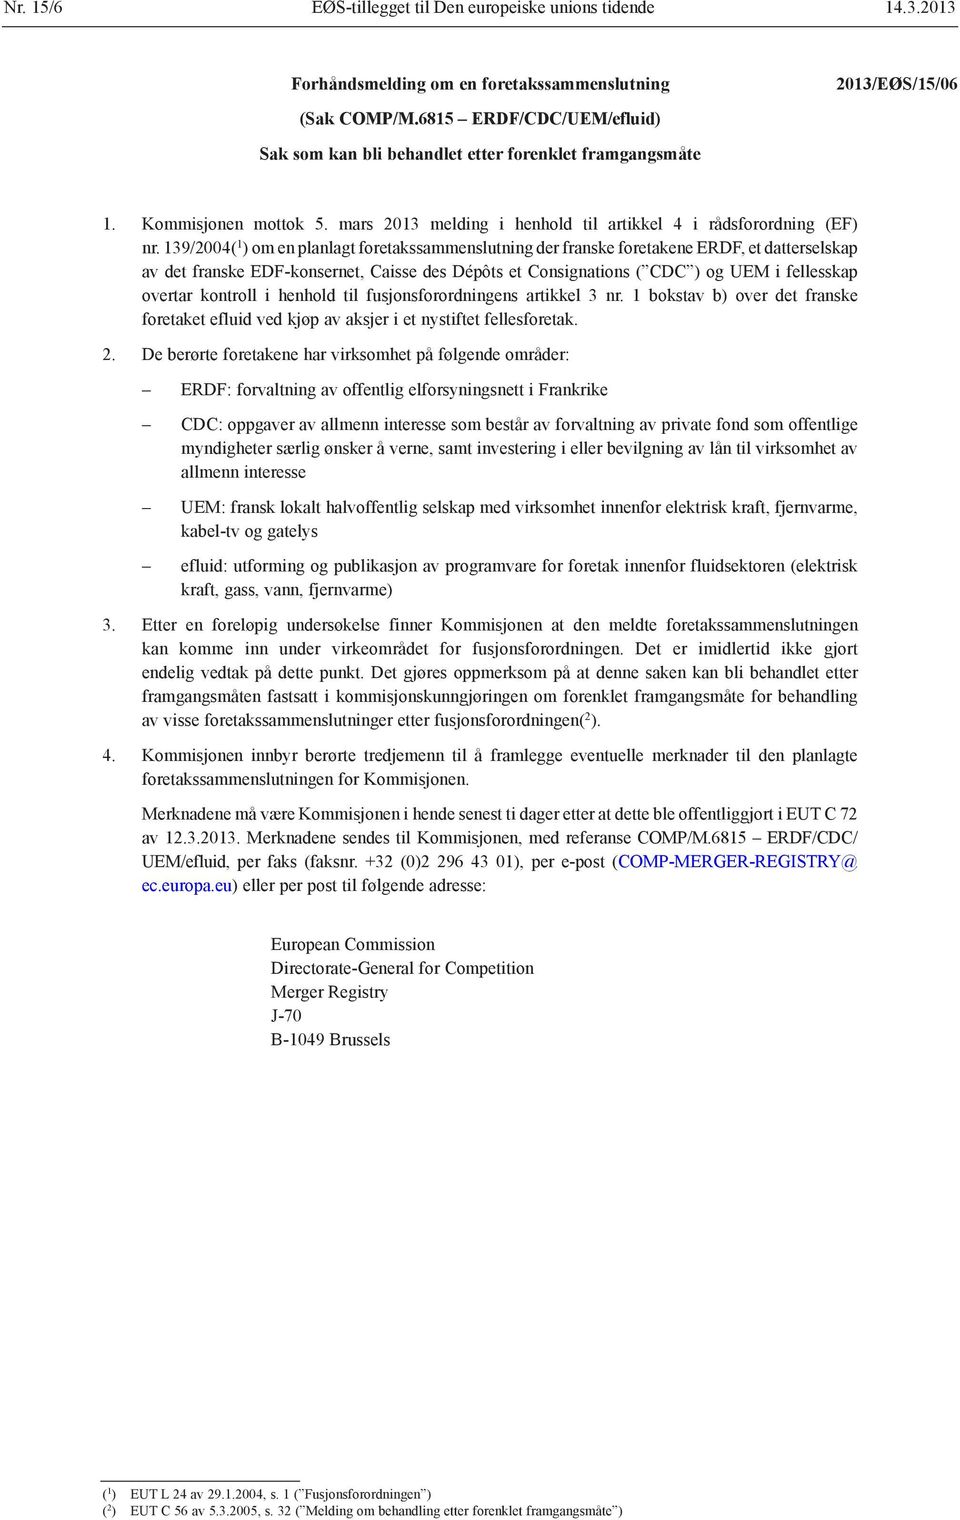 139/2004( 1 ) om en planlagt foretakssammenslutning der franske foretakene ERDF, et datterselskap av det franske EDF-konsernet, Caisse des Dépôts et Consignations ( CDC ) og UEM i fellesskap overtar